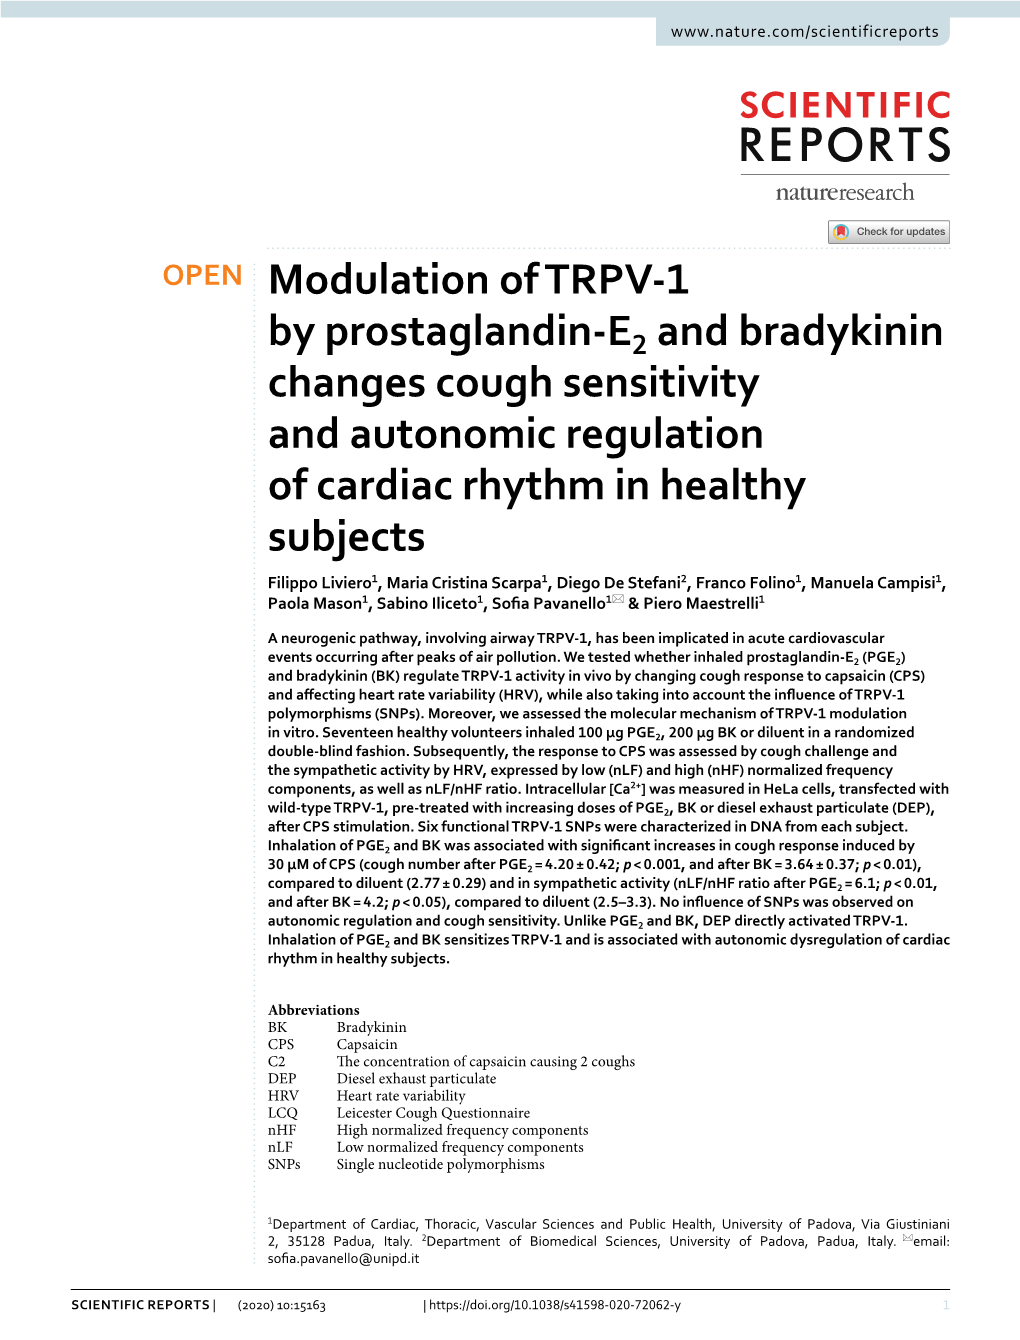 Modulation of TRPV-1 by Prostaglandin-E2 and Bradykinin